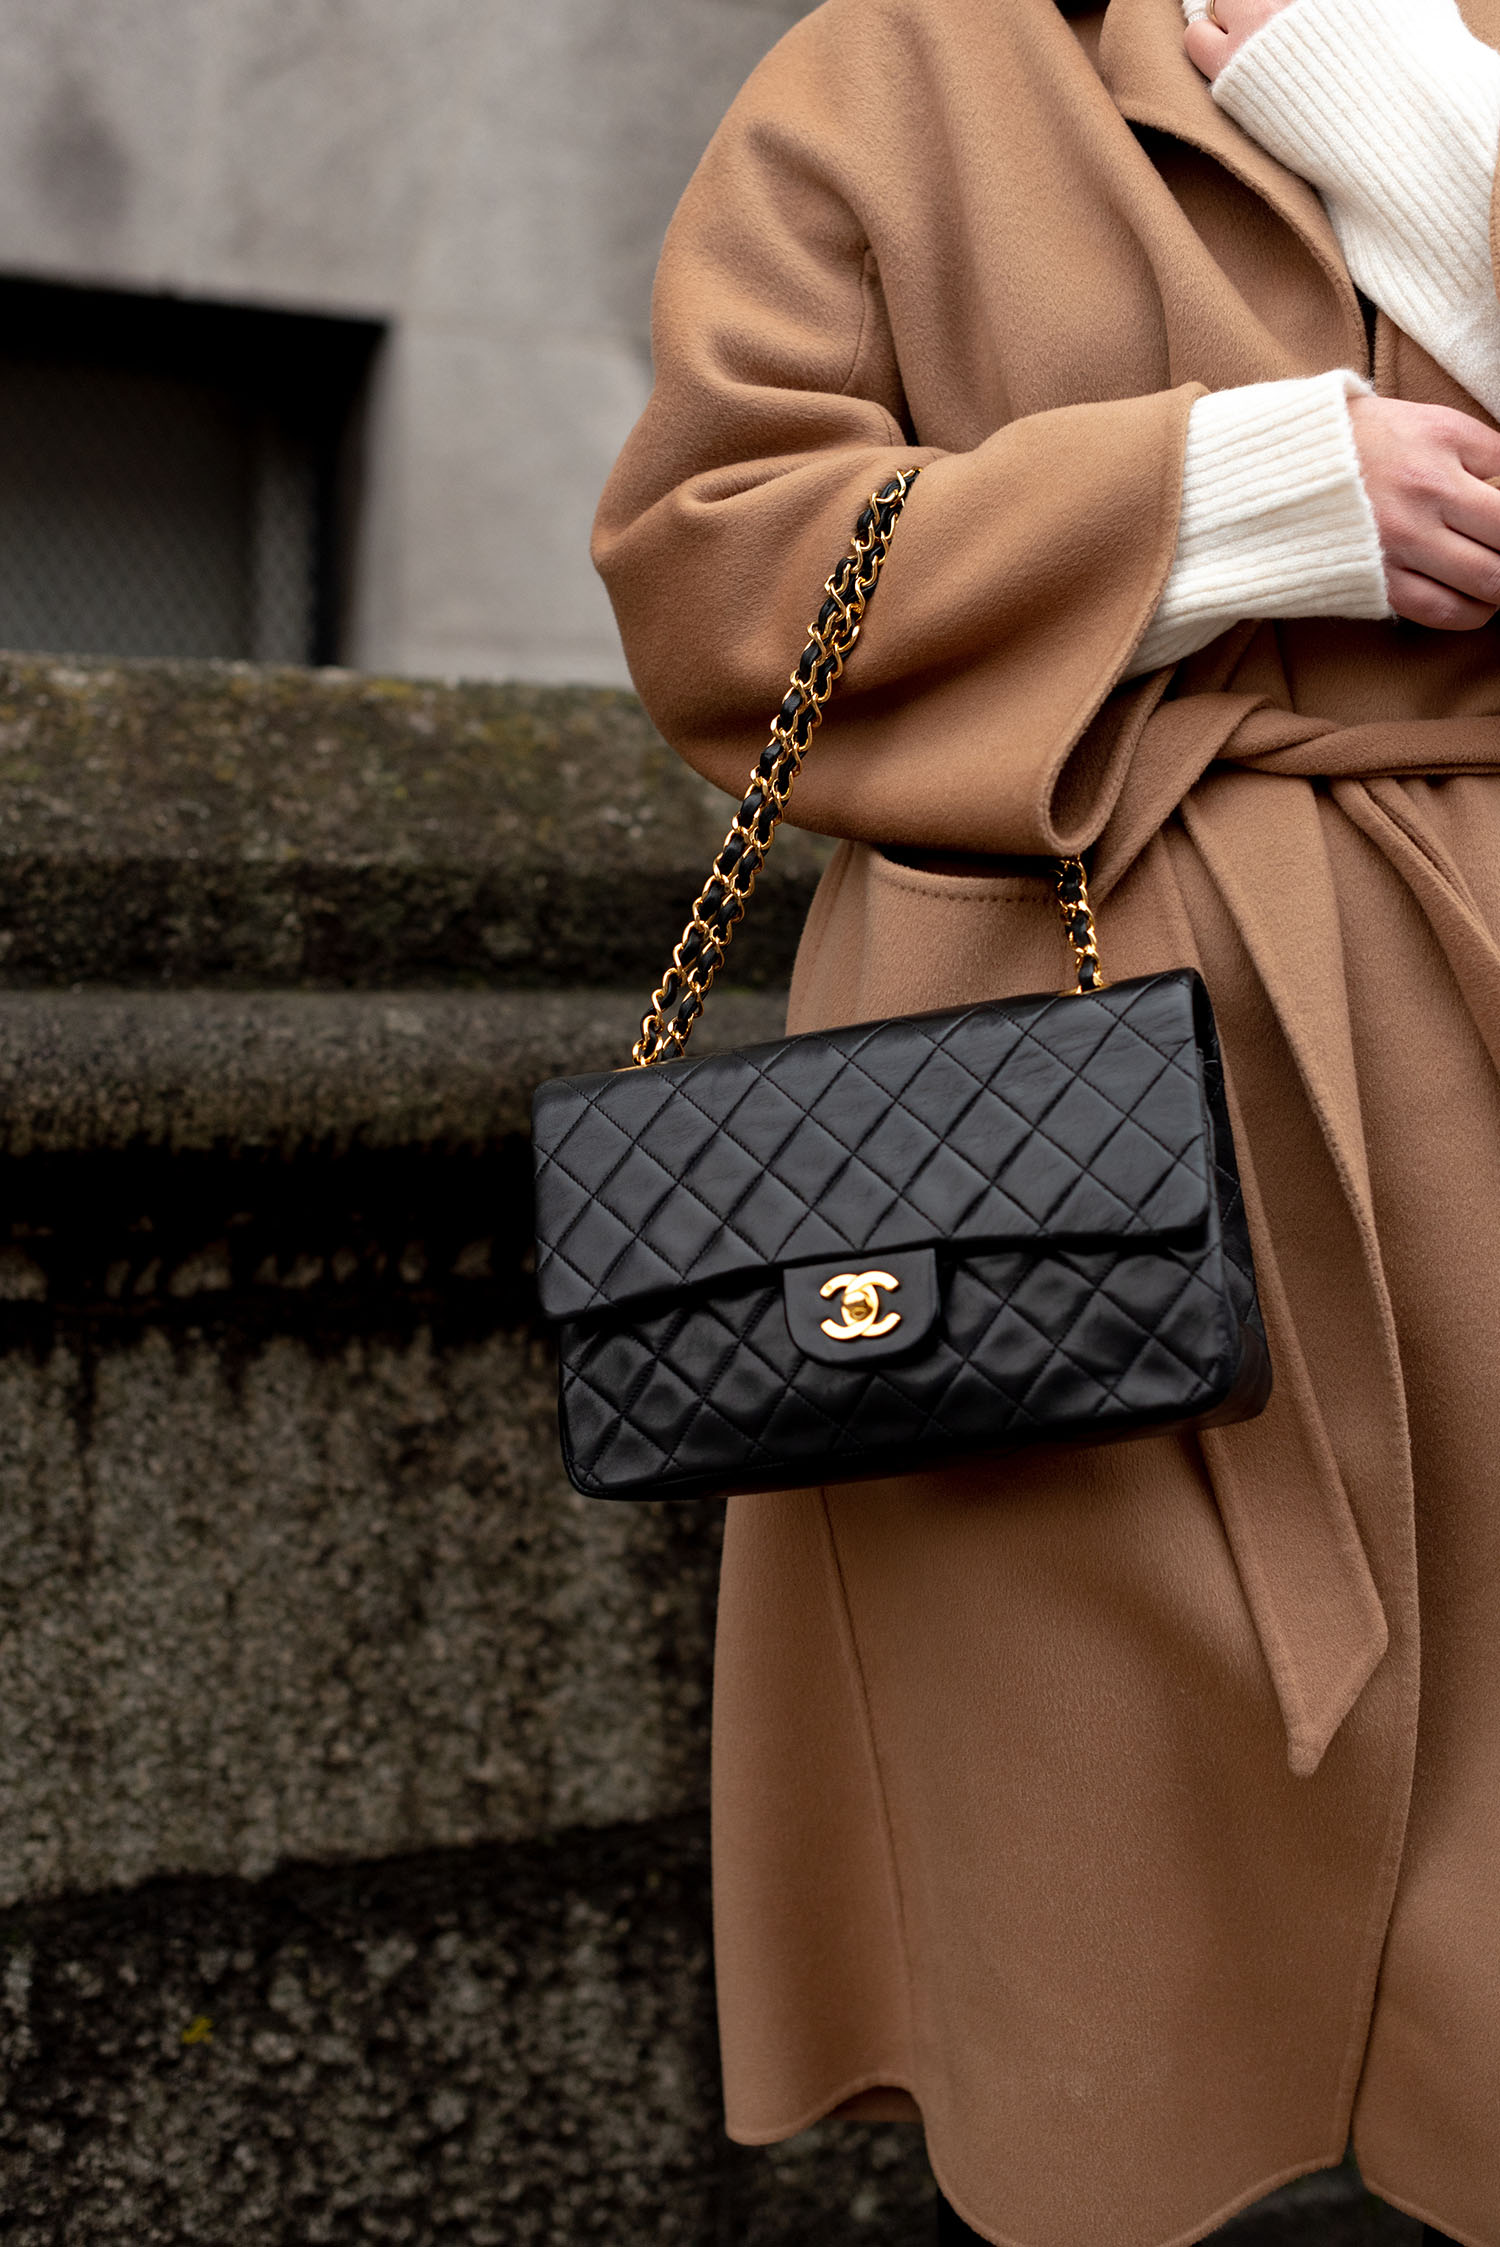 Coco & Vera - Chanel classic quilted handbag, The Curated coat, Zara cream sweater